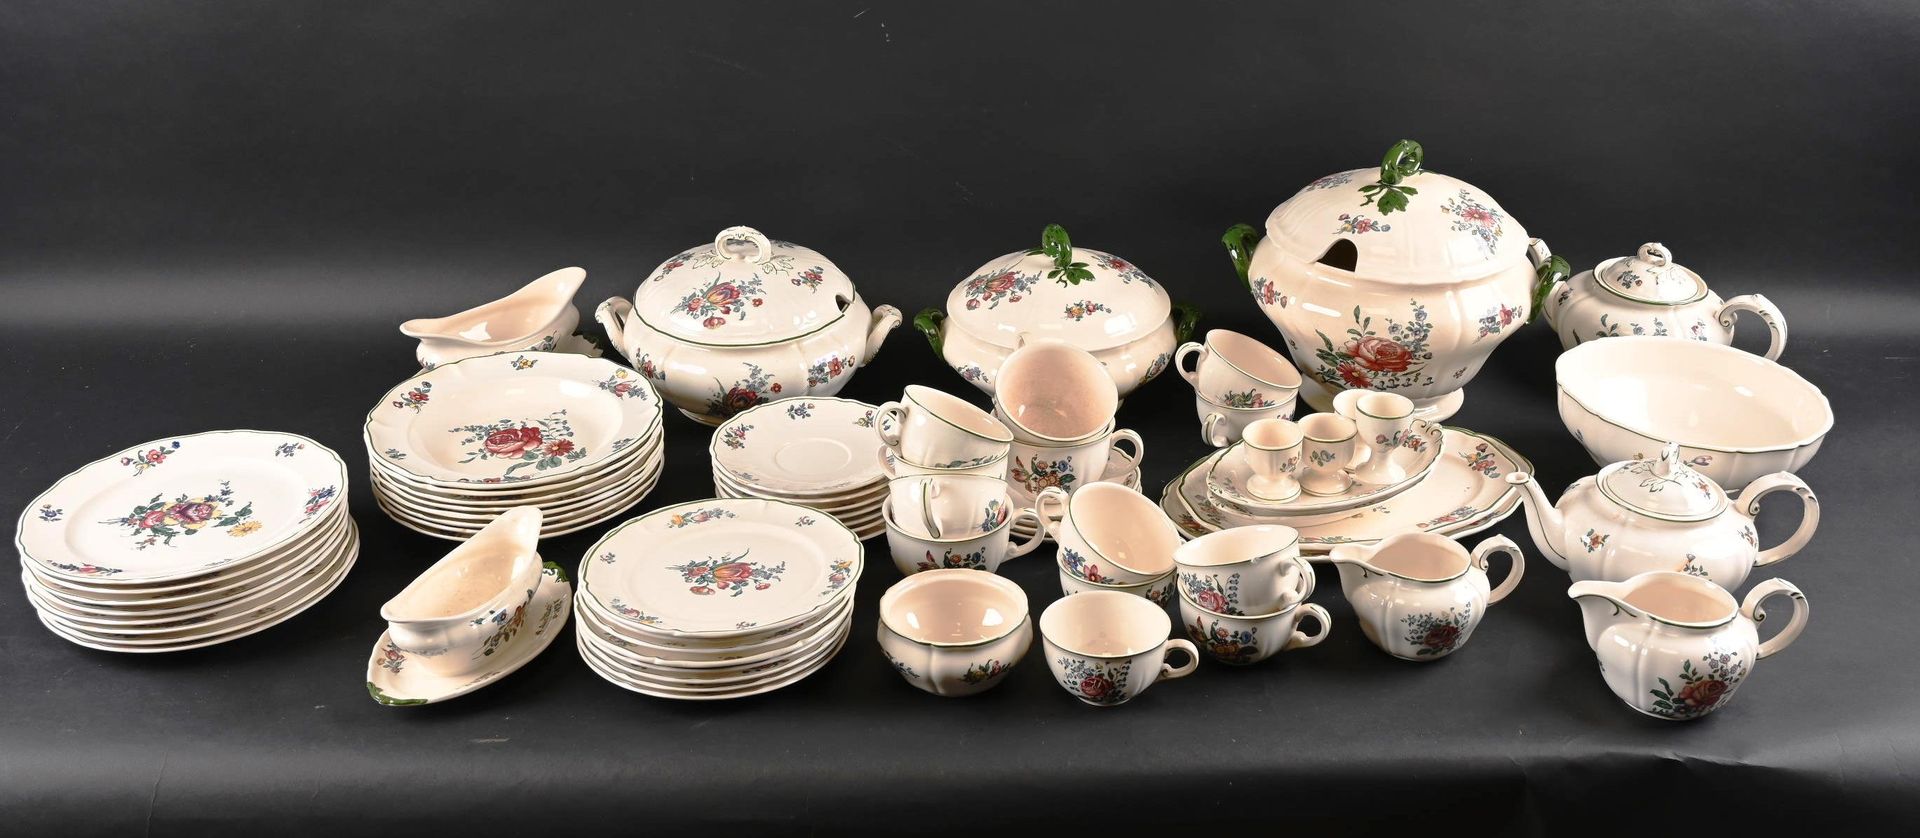 Strassburg/ Villeroy & Boch Strassburg/ Villeroy & Boch

Vajilla de porcelana co&hellip;